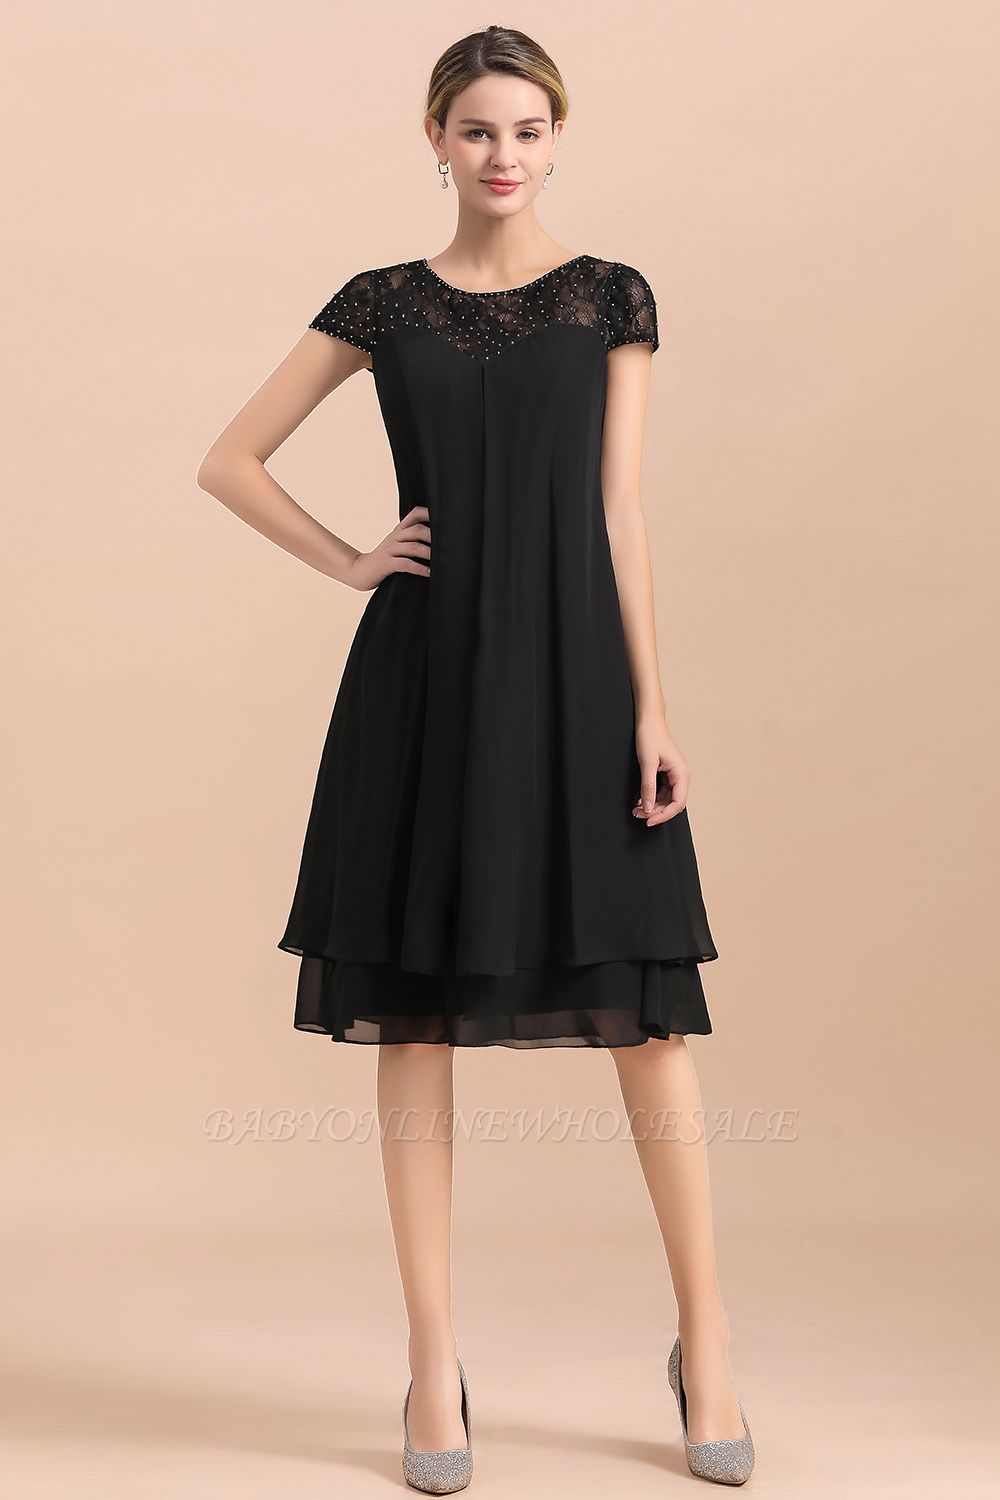 Black Short Sleeves Lace Wedding Party Dress Chiffon Knee Length Dress